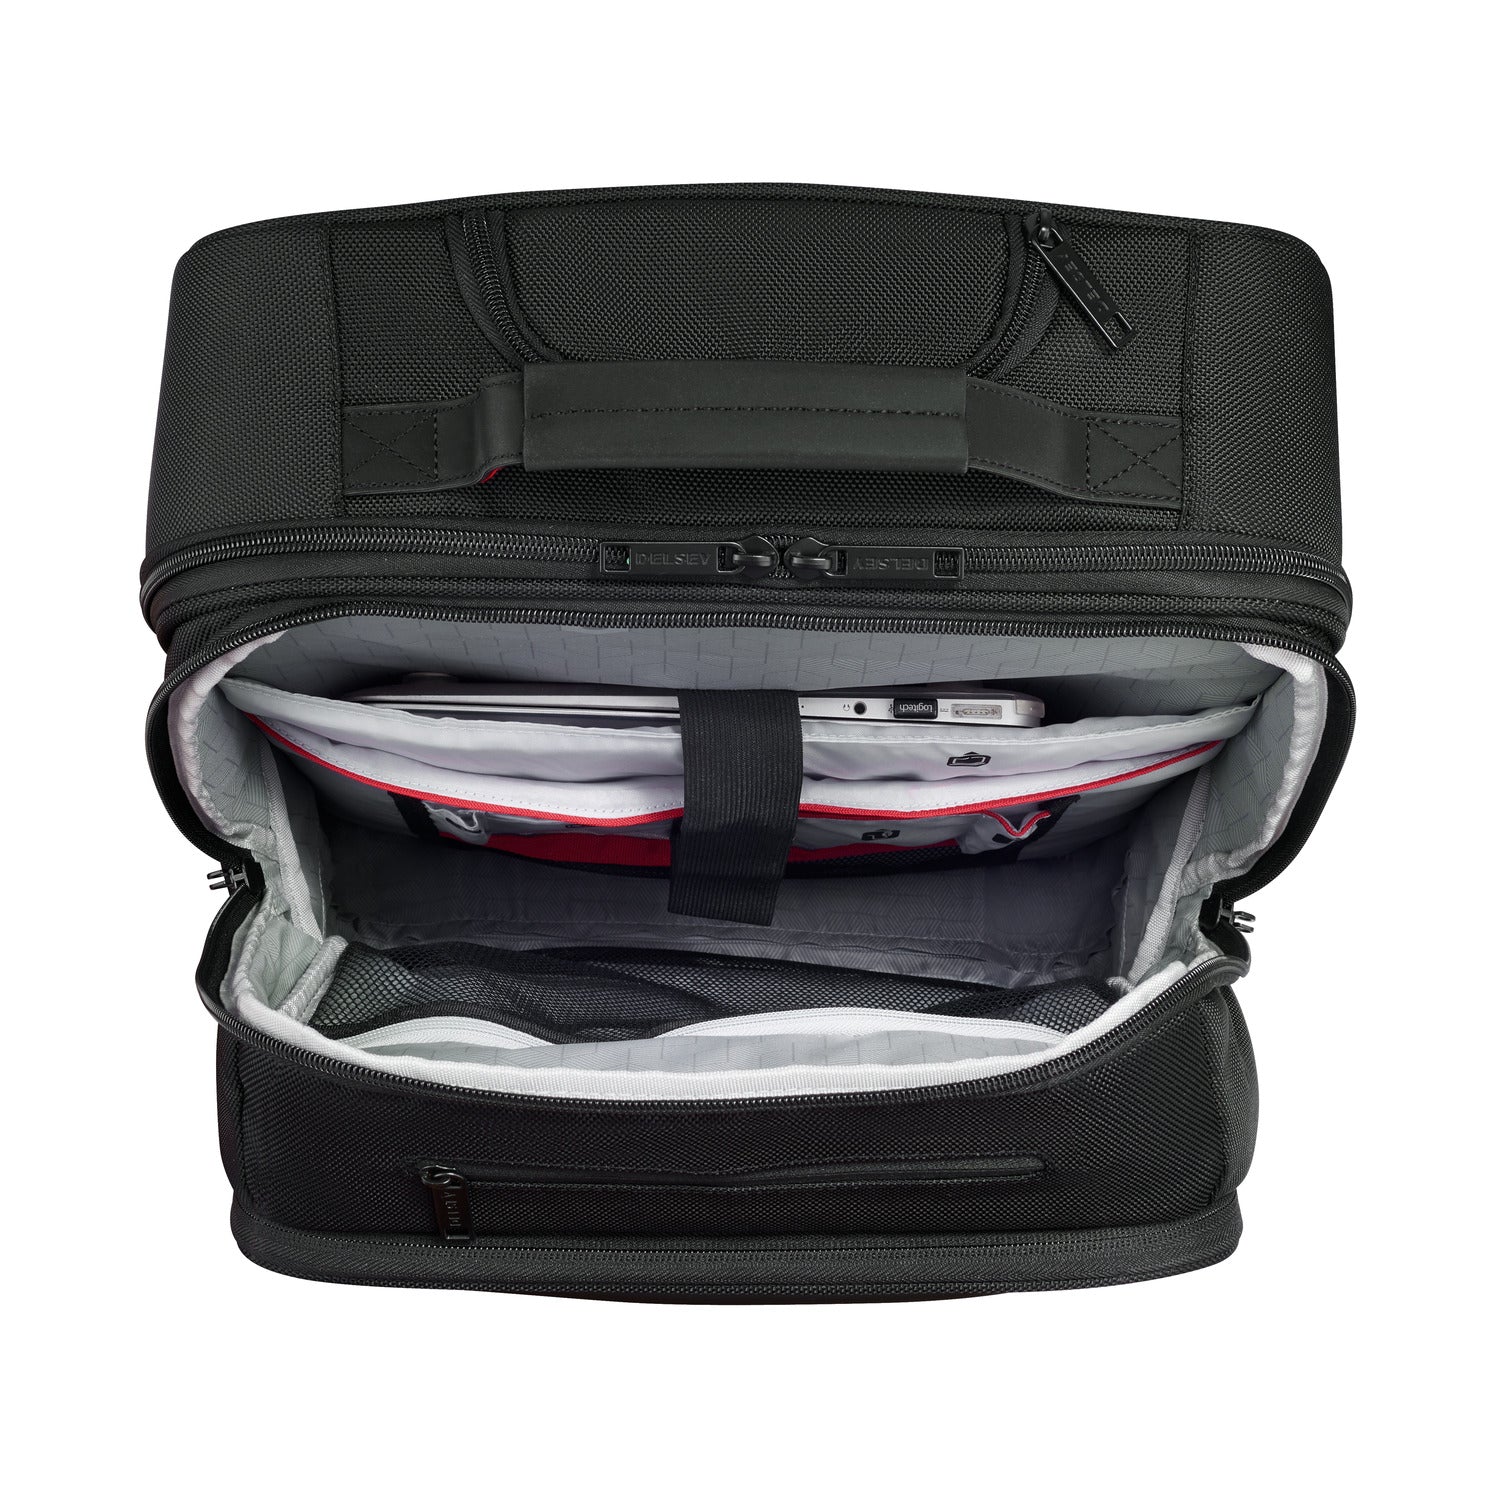 Delsey Parvis+ Backpack Cabin Laptop Trolley 17.3 inch Black - 394465000